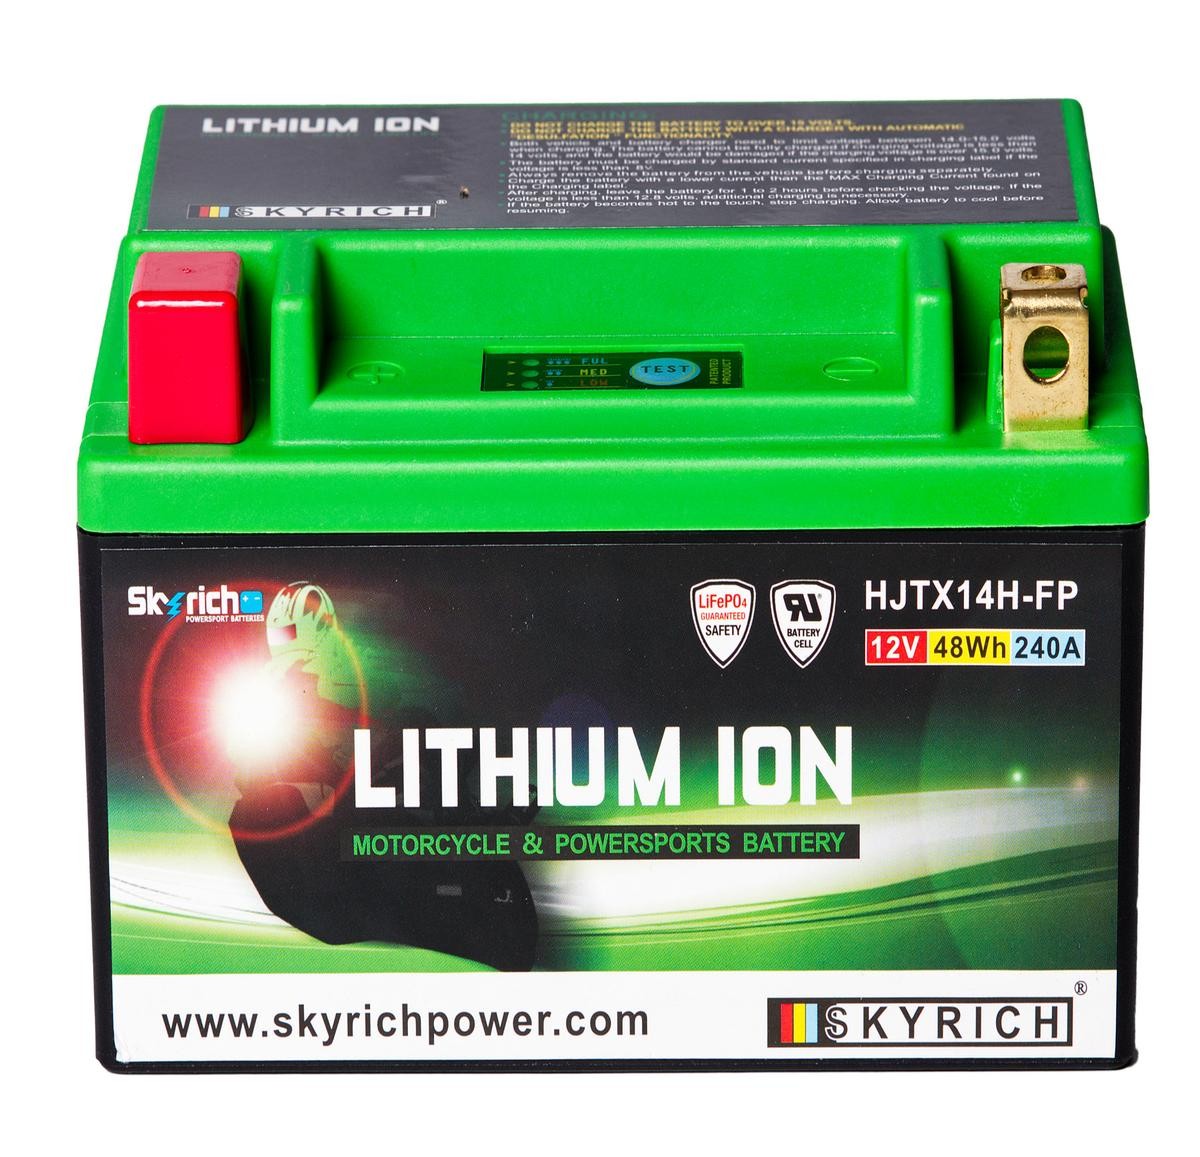 HUSQVARNA TE Batterie 12V 4Ah 240A N Li-Ionen-Batterie SKYRICH LITHIUM ION HJTX14H-FP